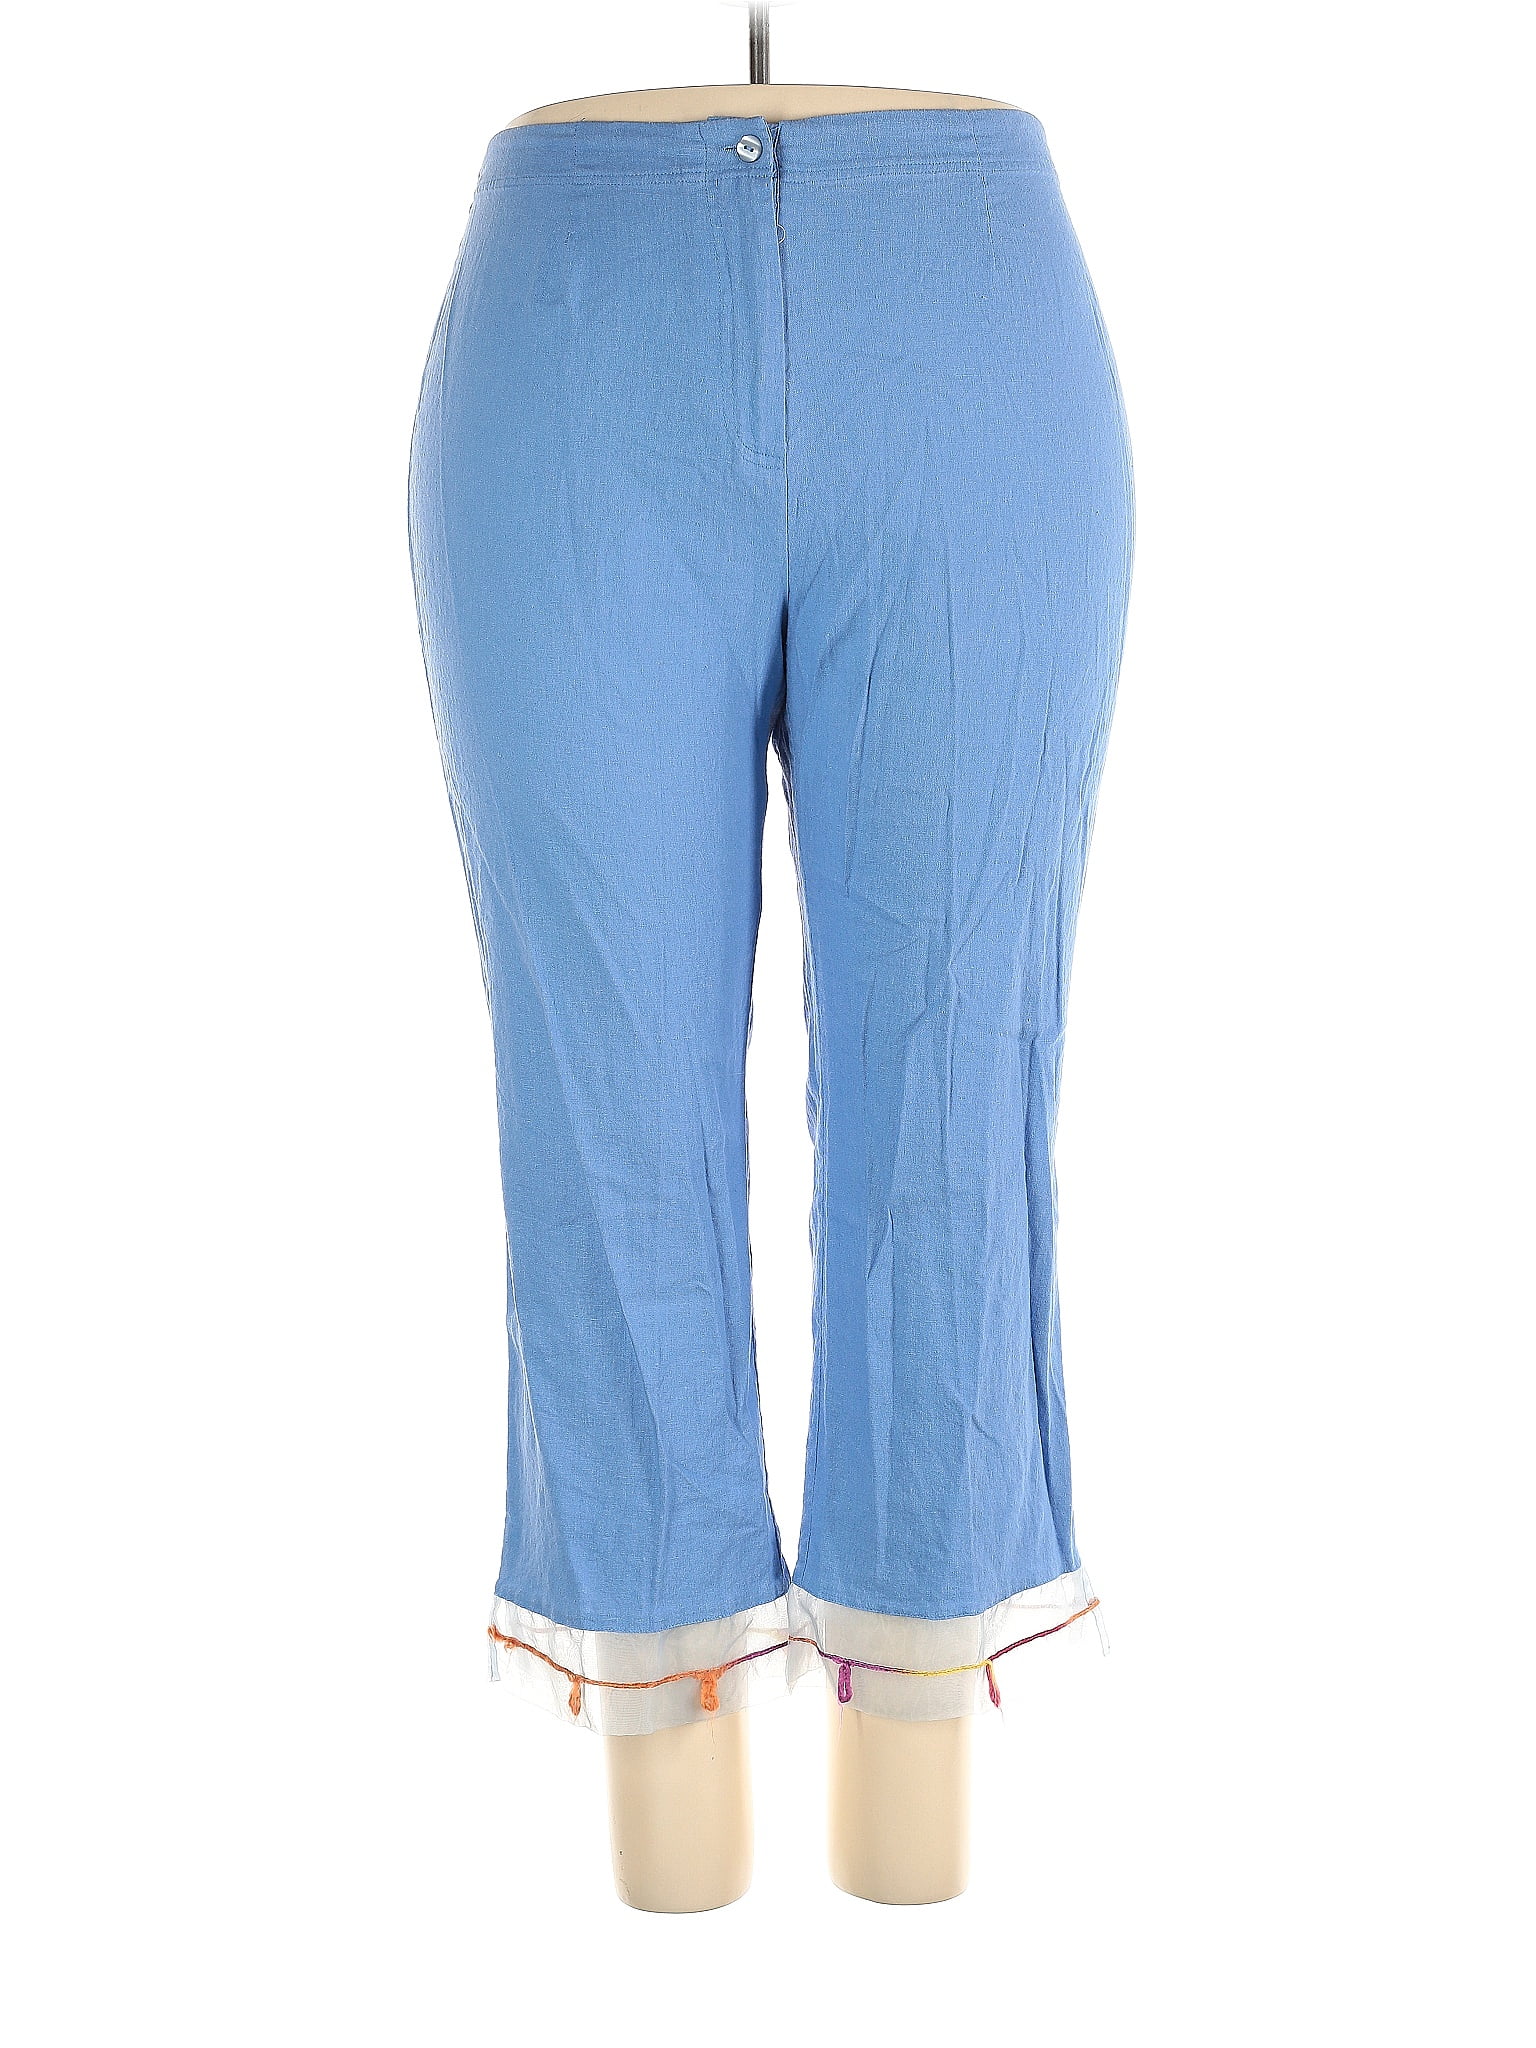 Assorted Brands Polka Dots Blue Casual Pants Size 38 (EU) - 51